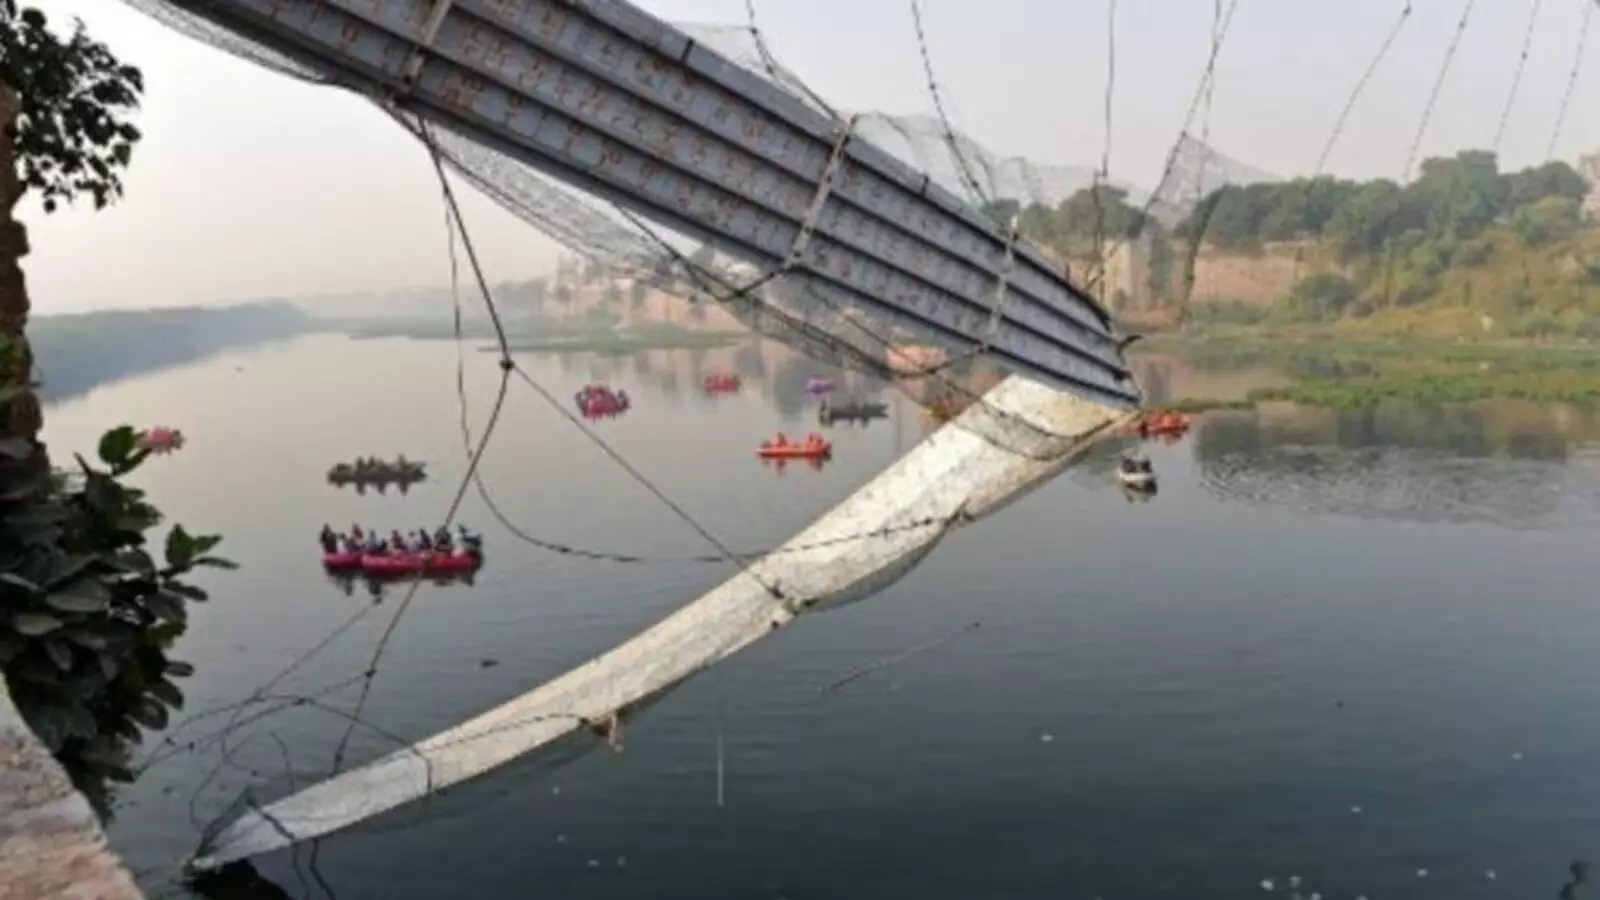 Morbi Bridge collapse was an engineering disaster due to improper maintenance: Gujarat High Court